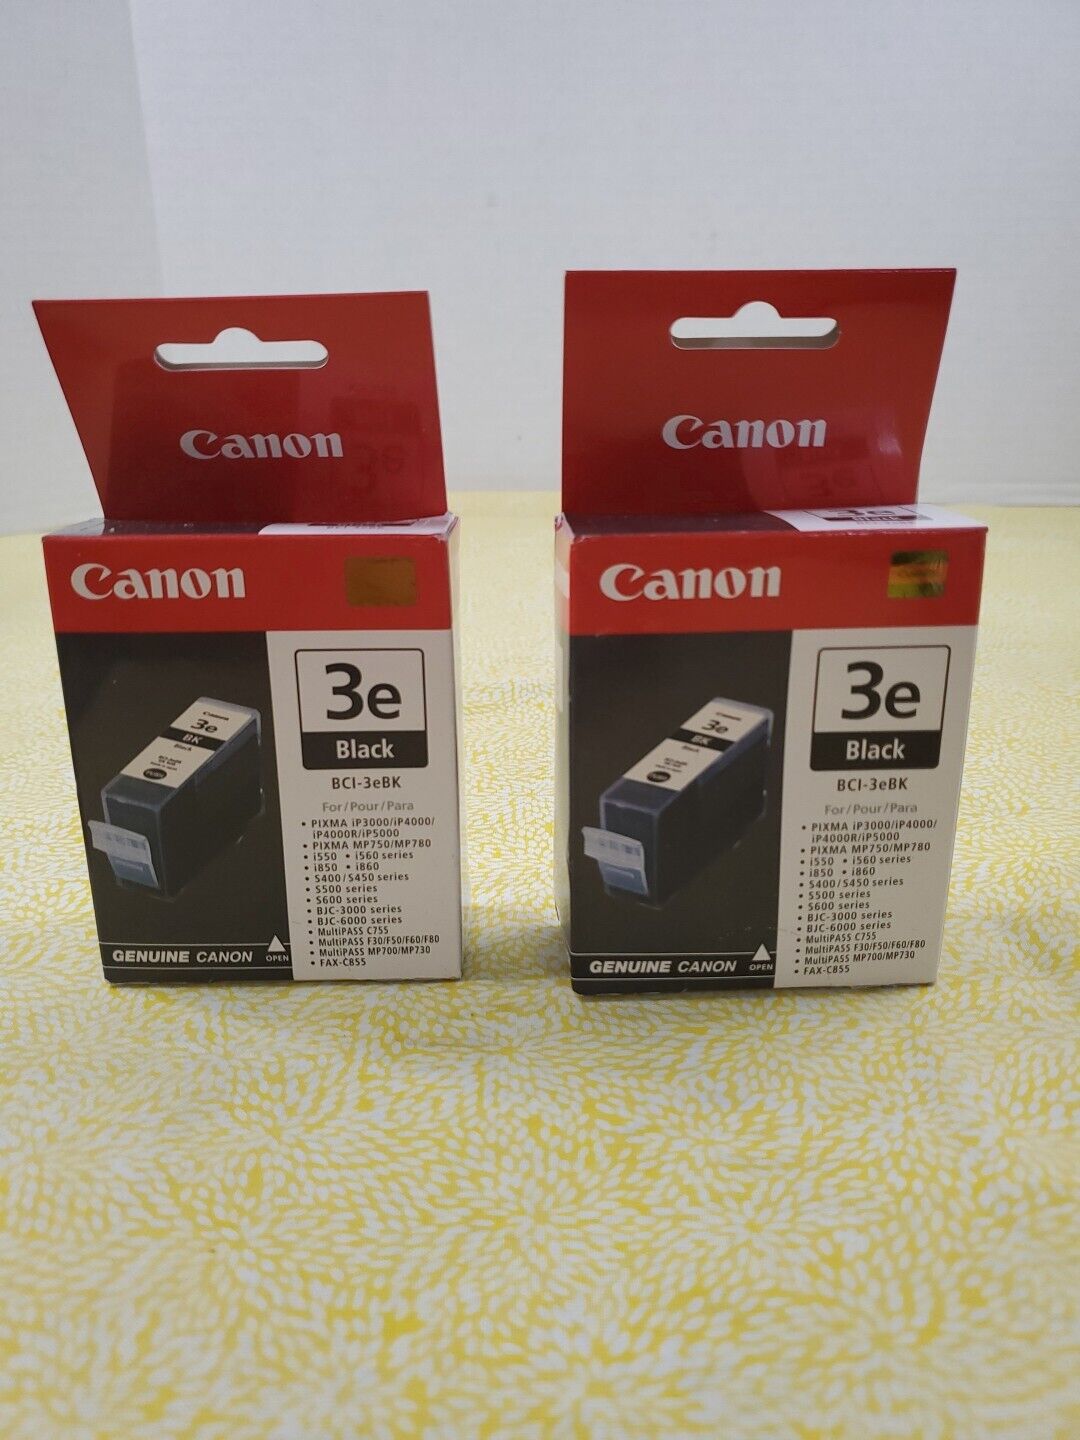 2x Canon 3e Black Ink Cartridges BCI-3eBK NEW Factory Sealed PIXMA